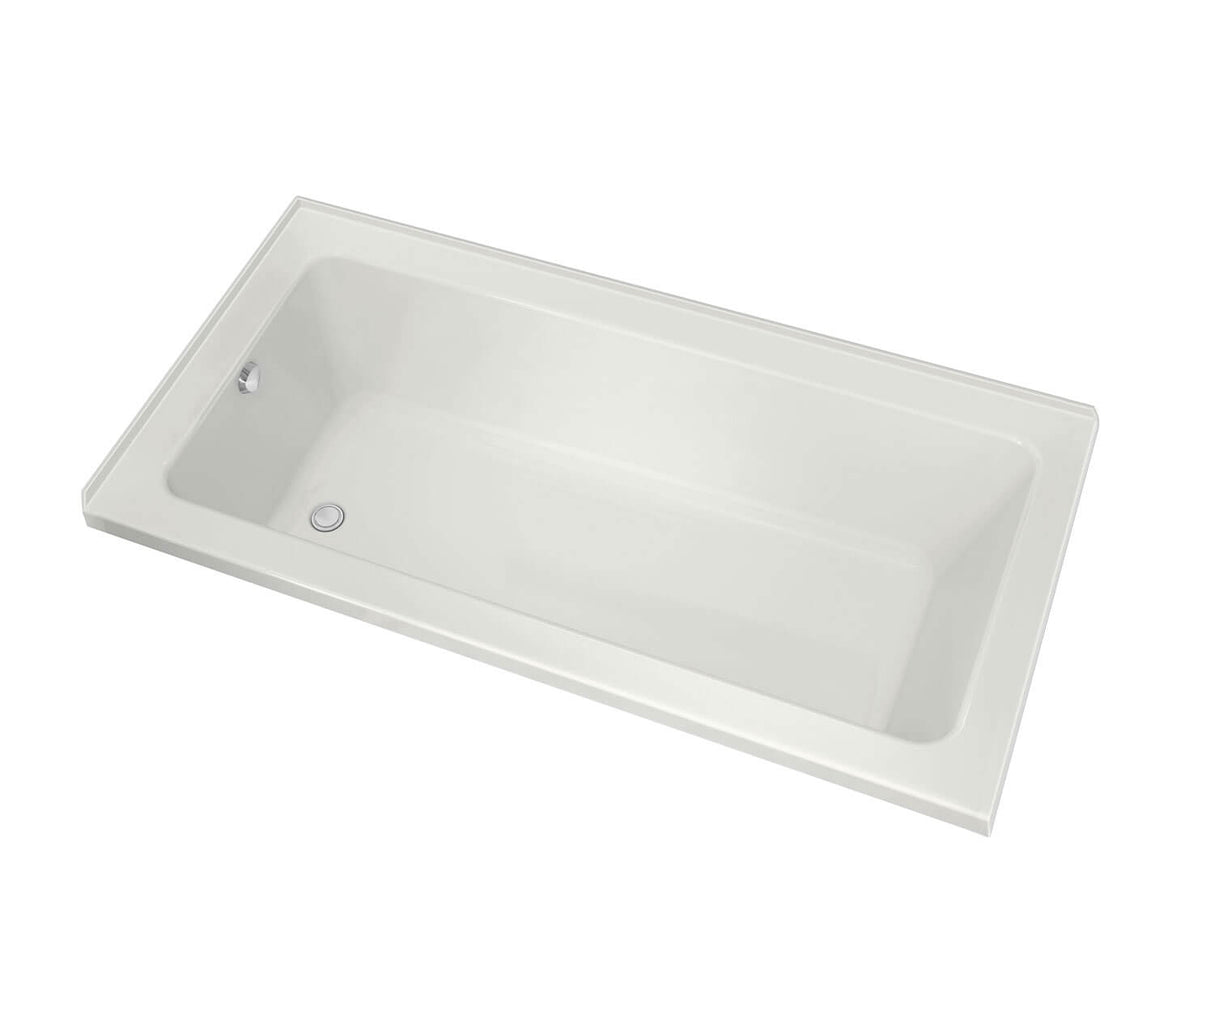 MAAX 106214-000-001-107 Pose 7242 IF Acrylic Corner Left Left-Hand Drain Bathtub in White